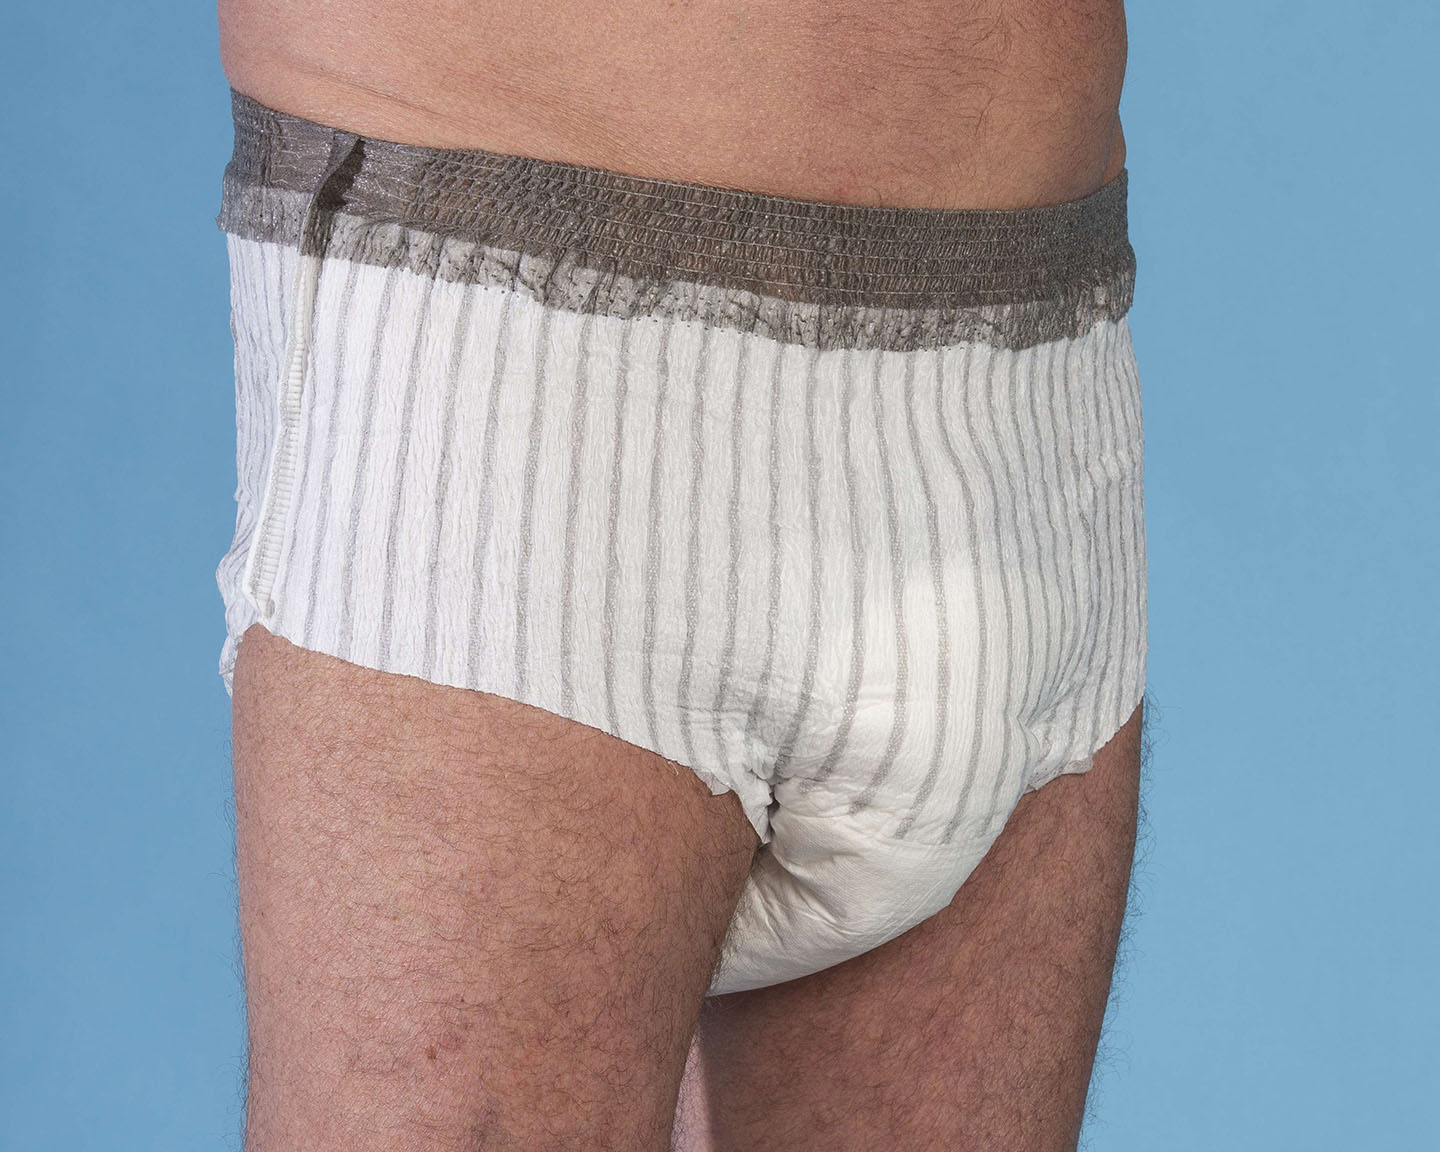 Men's Disposable Underwear  Incontinence Briefs for Men